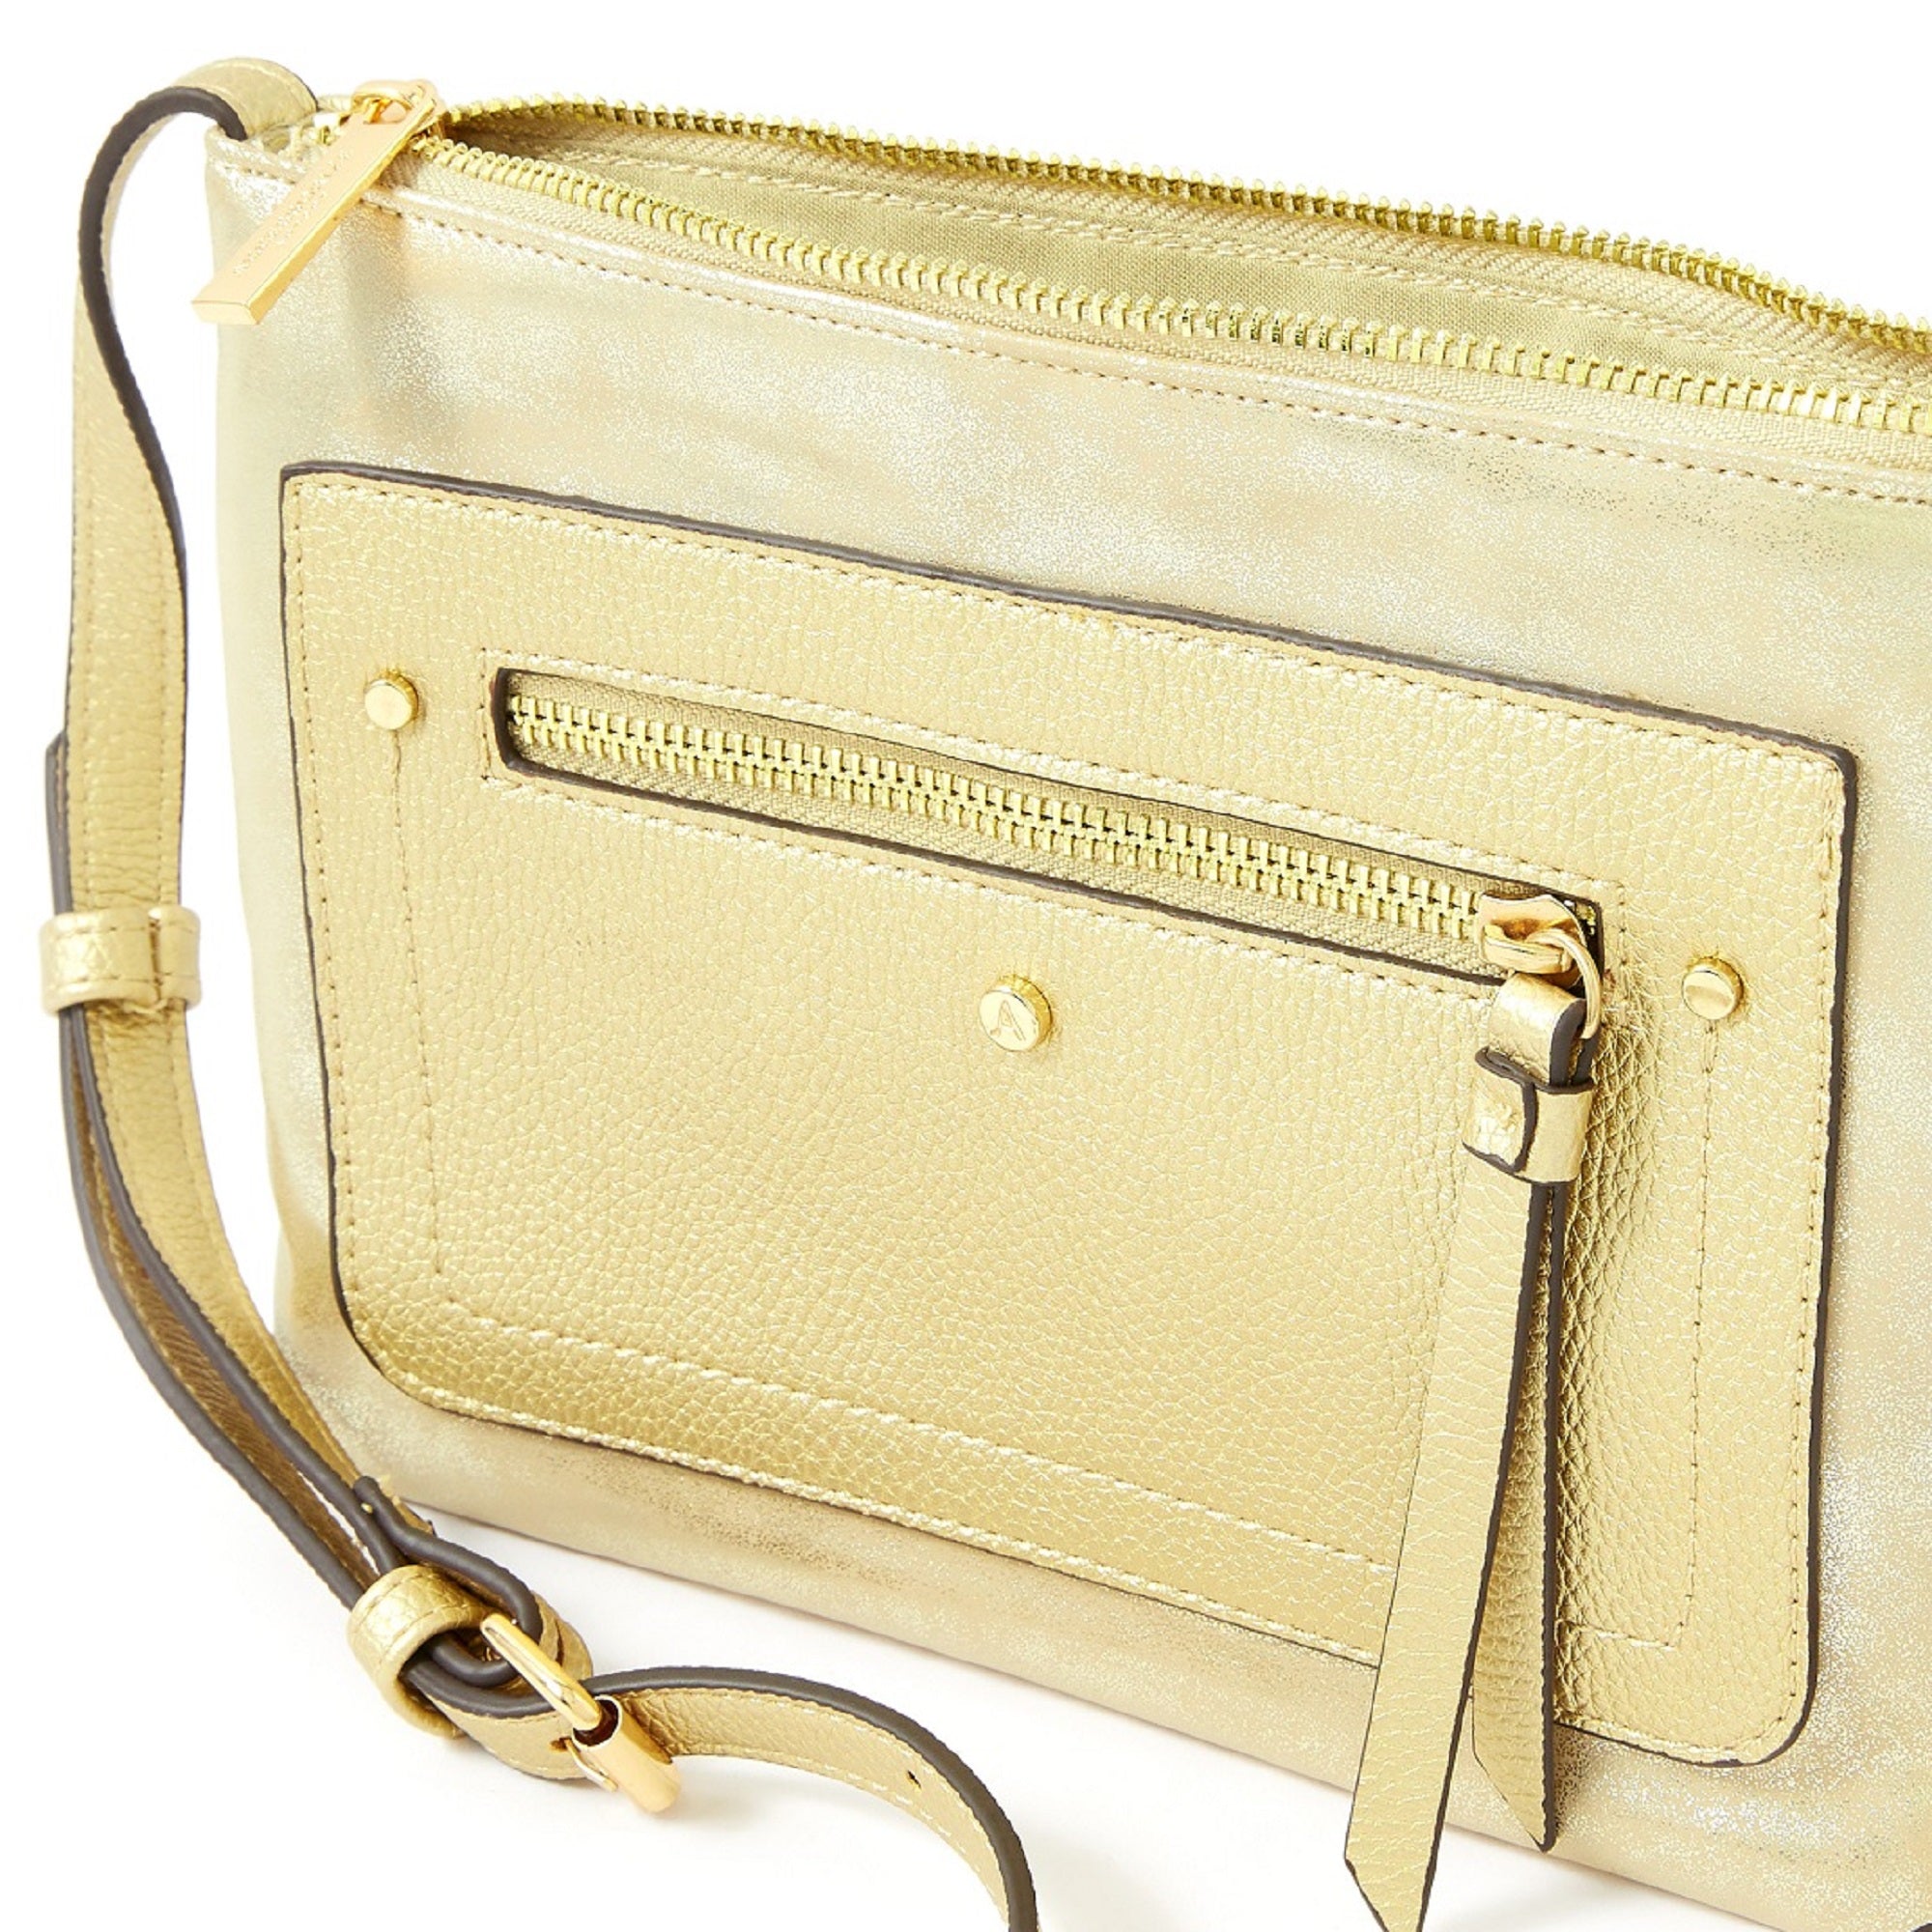 Accessorize London women's Faux Leather Gold Ella Messenger Sling bag - Accessorize India